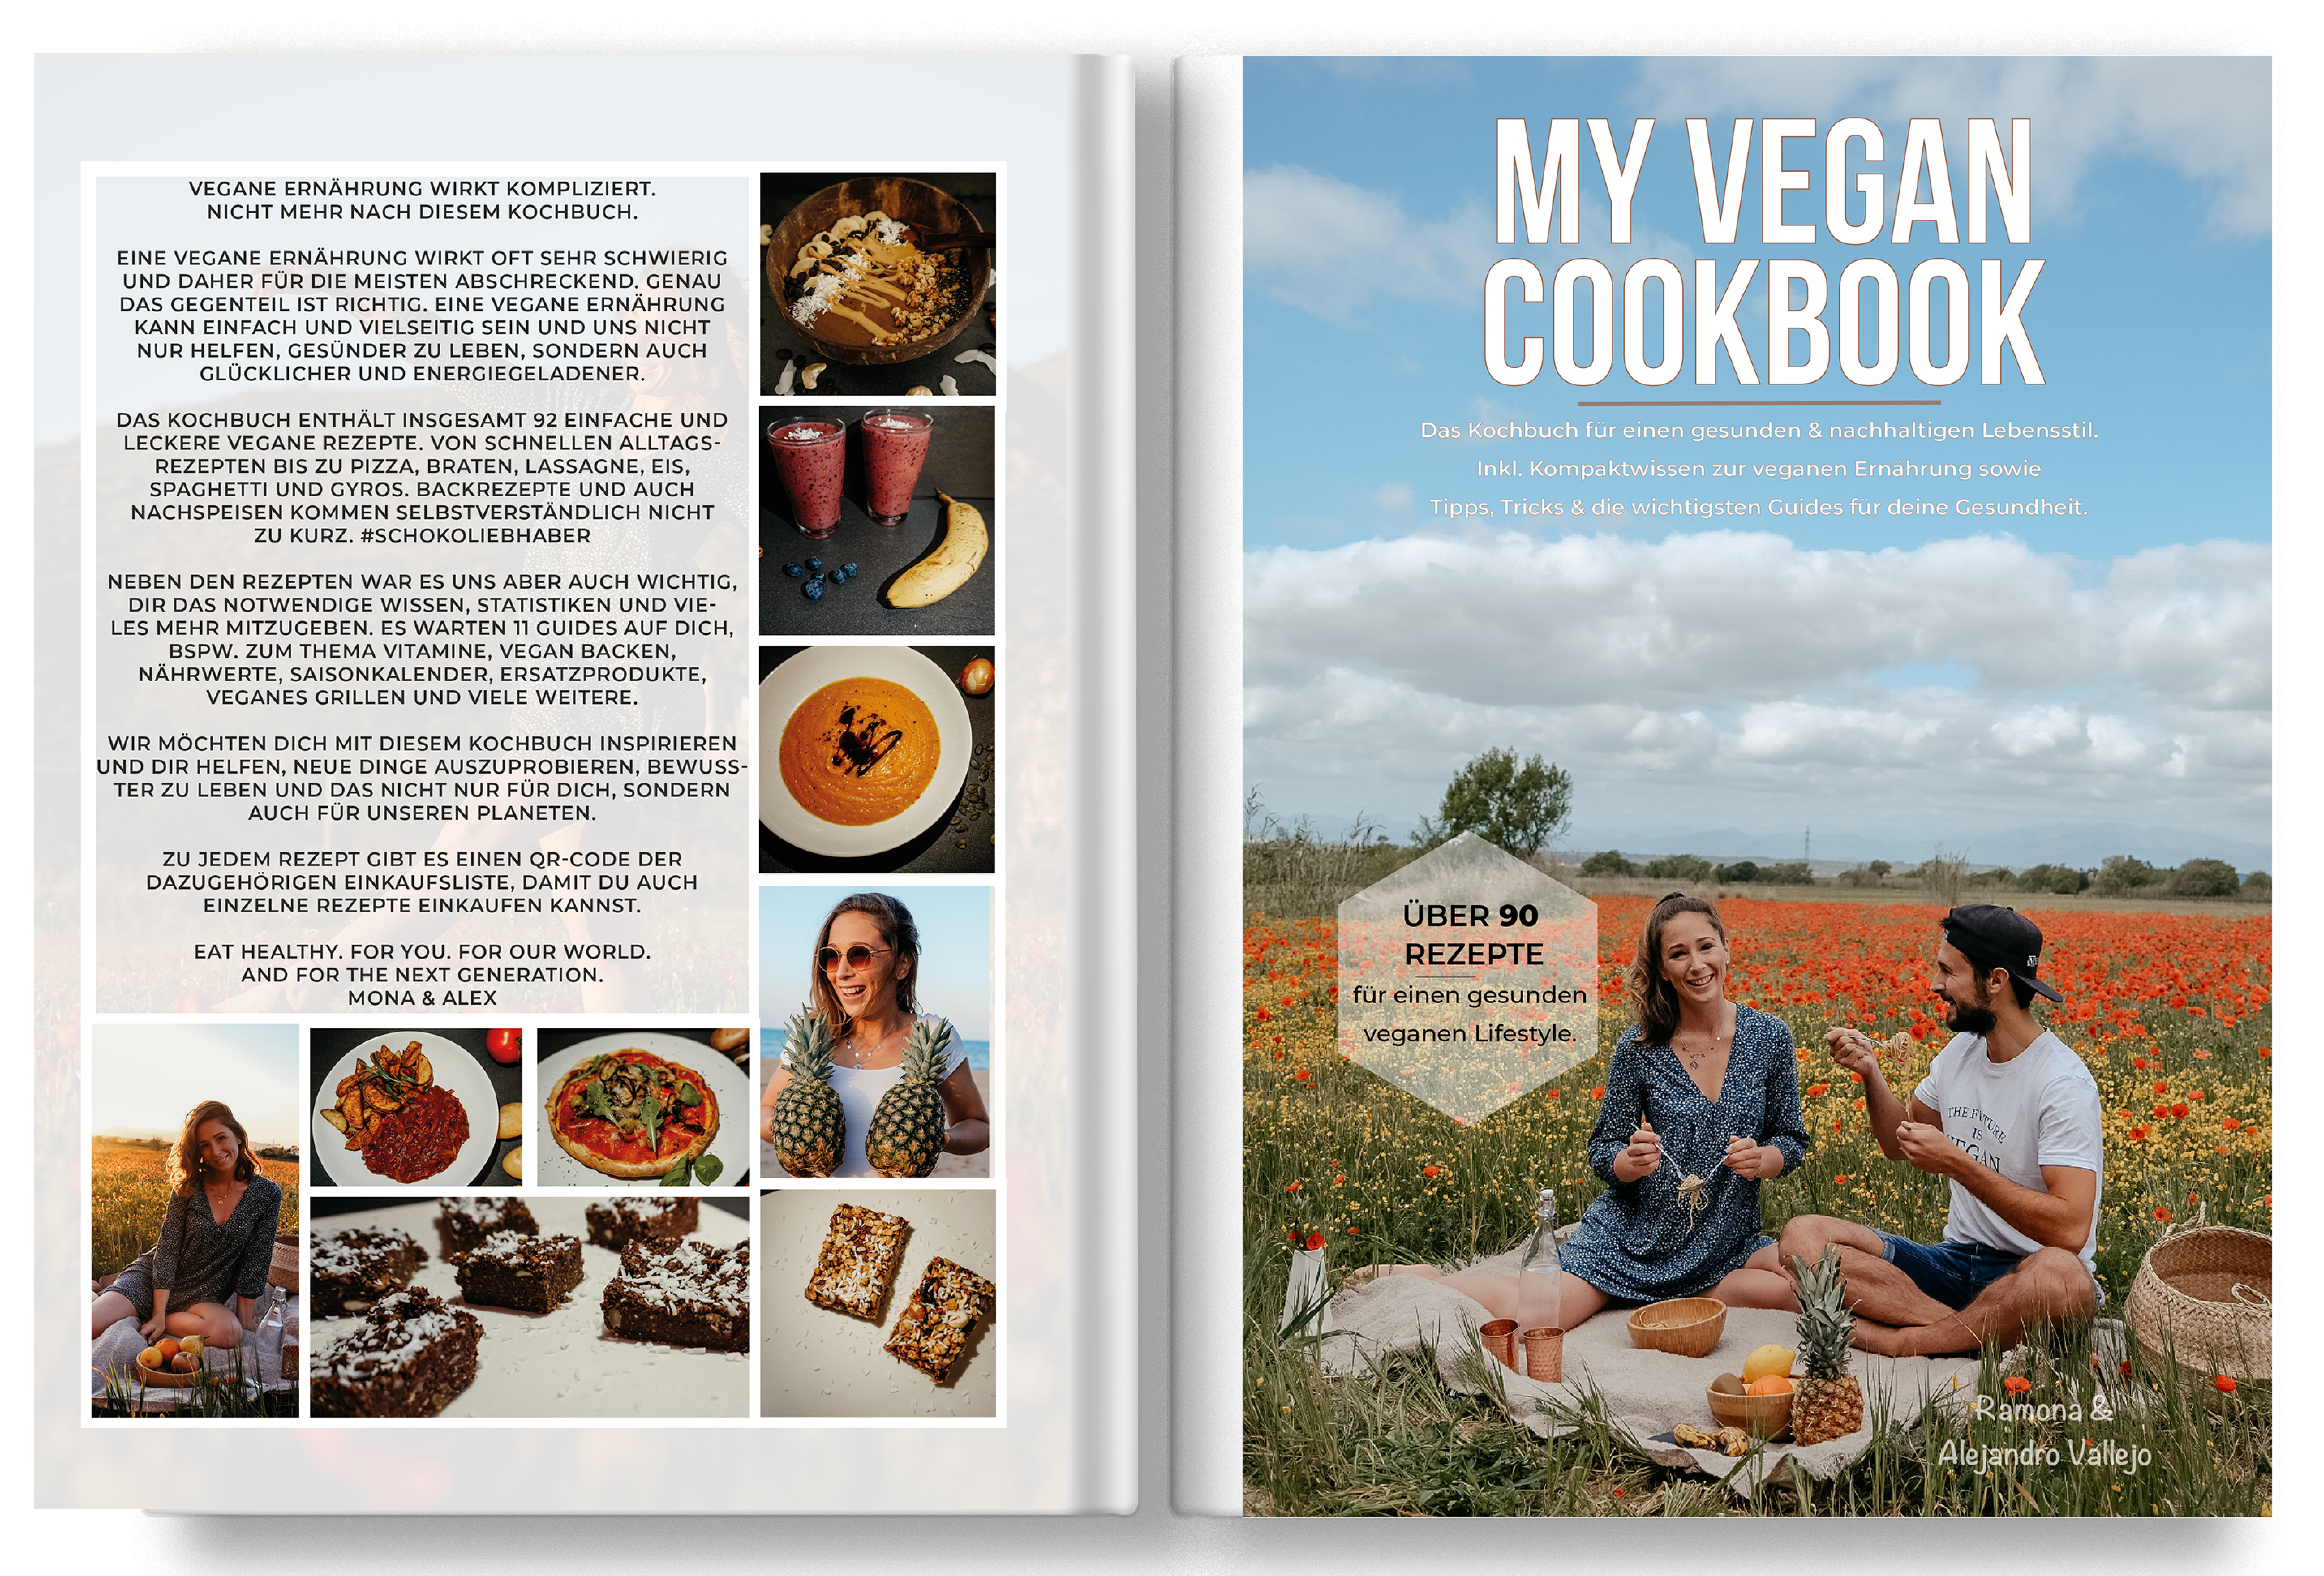 → Veganes Kochbuch 'MY VEGAN COOKBOOK' (Buch) | 92 Rezepte | Vegan Backen, Frühstück, schnelle Rezepte, u.v.m. | Inkl. Wissen & Guides. ←